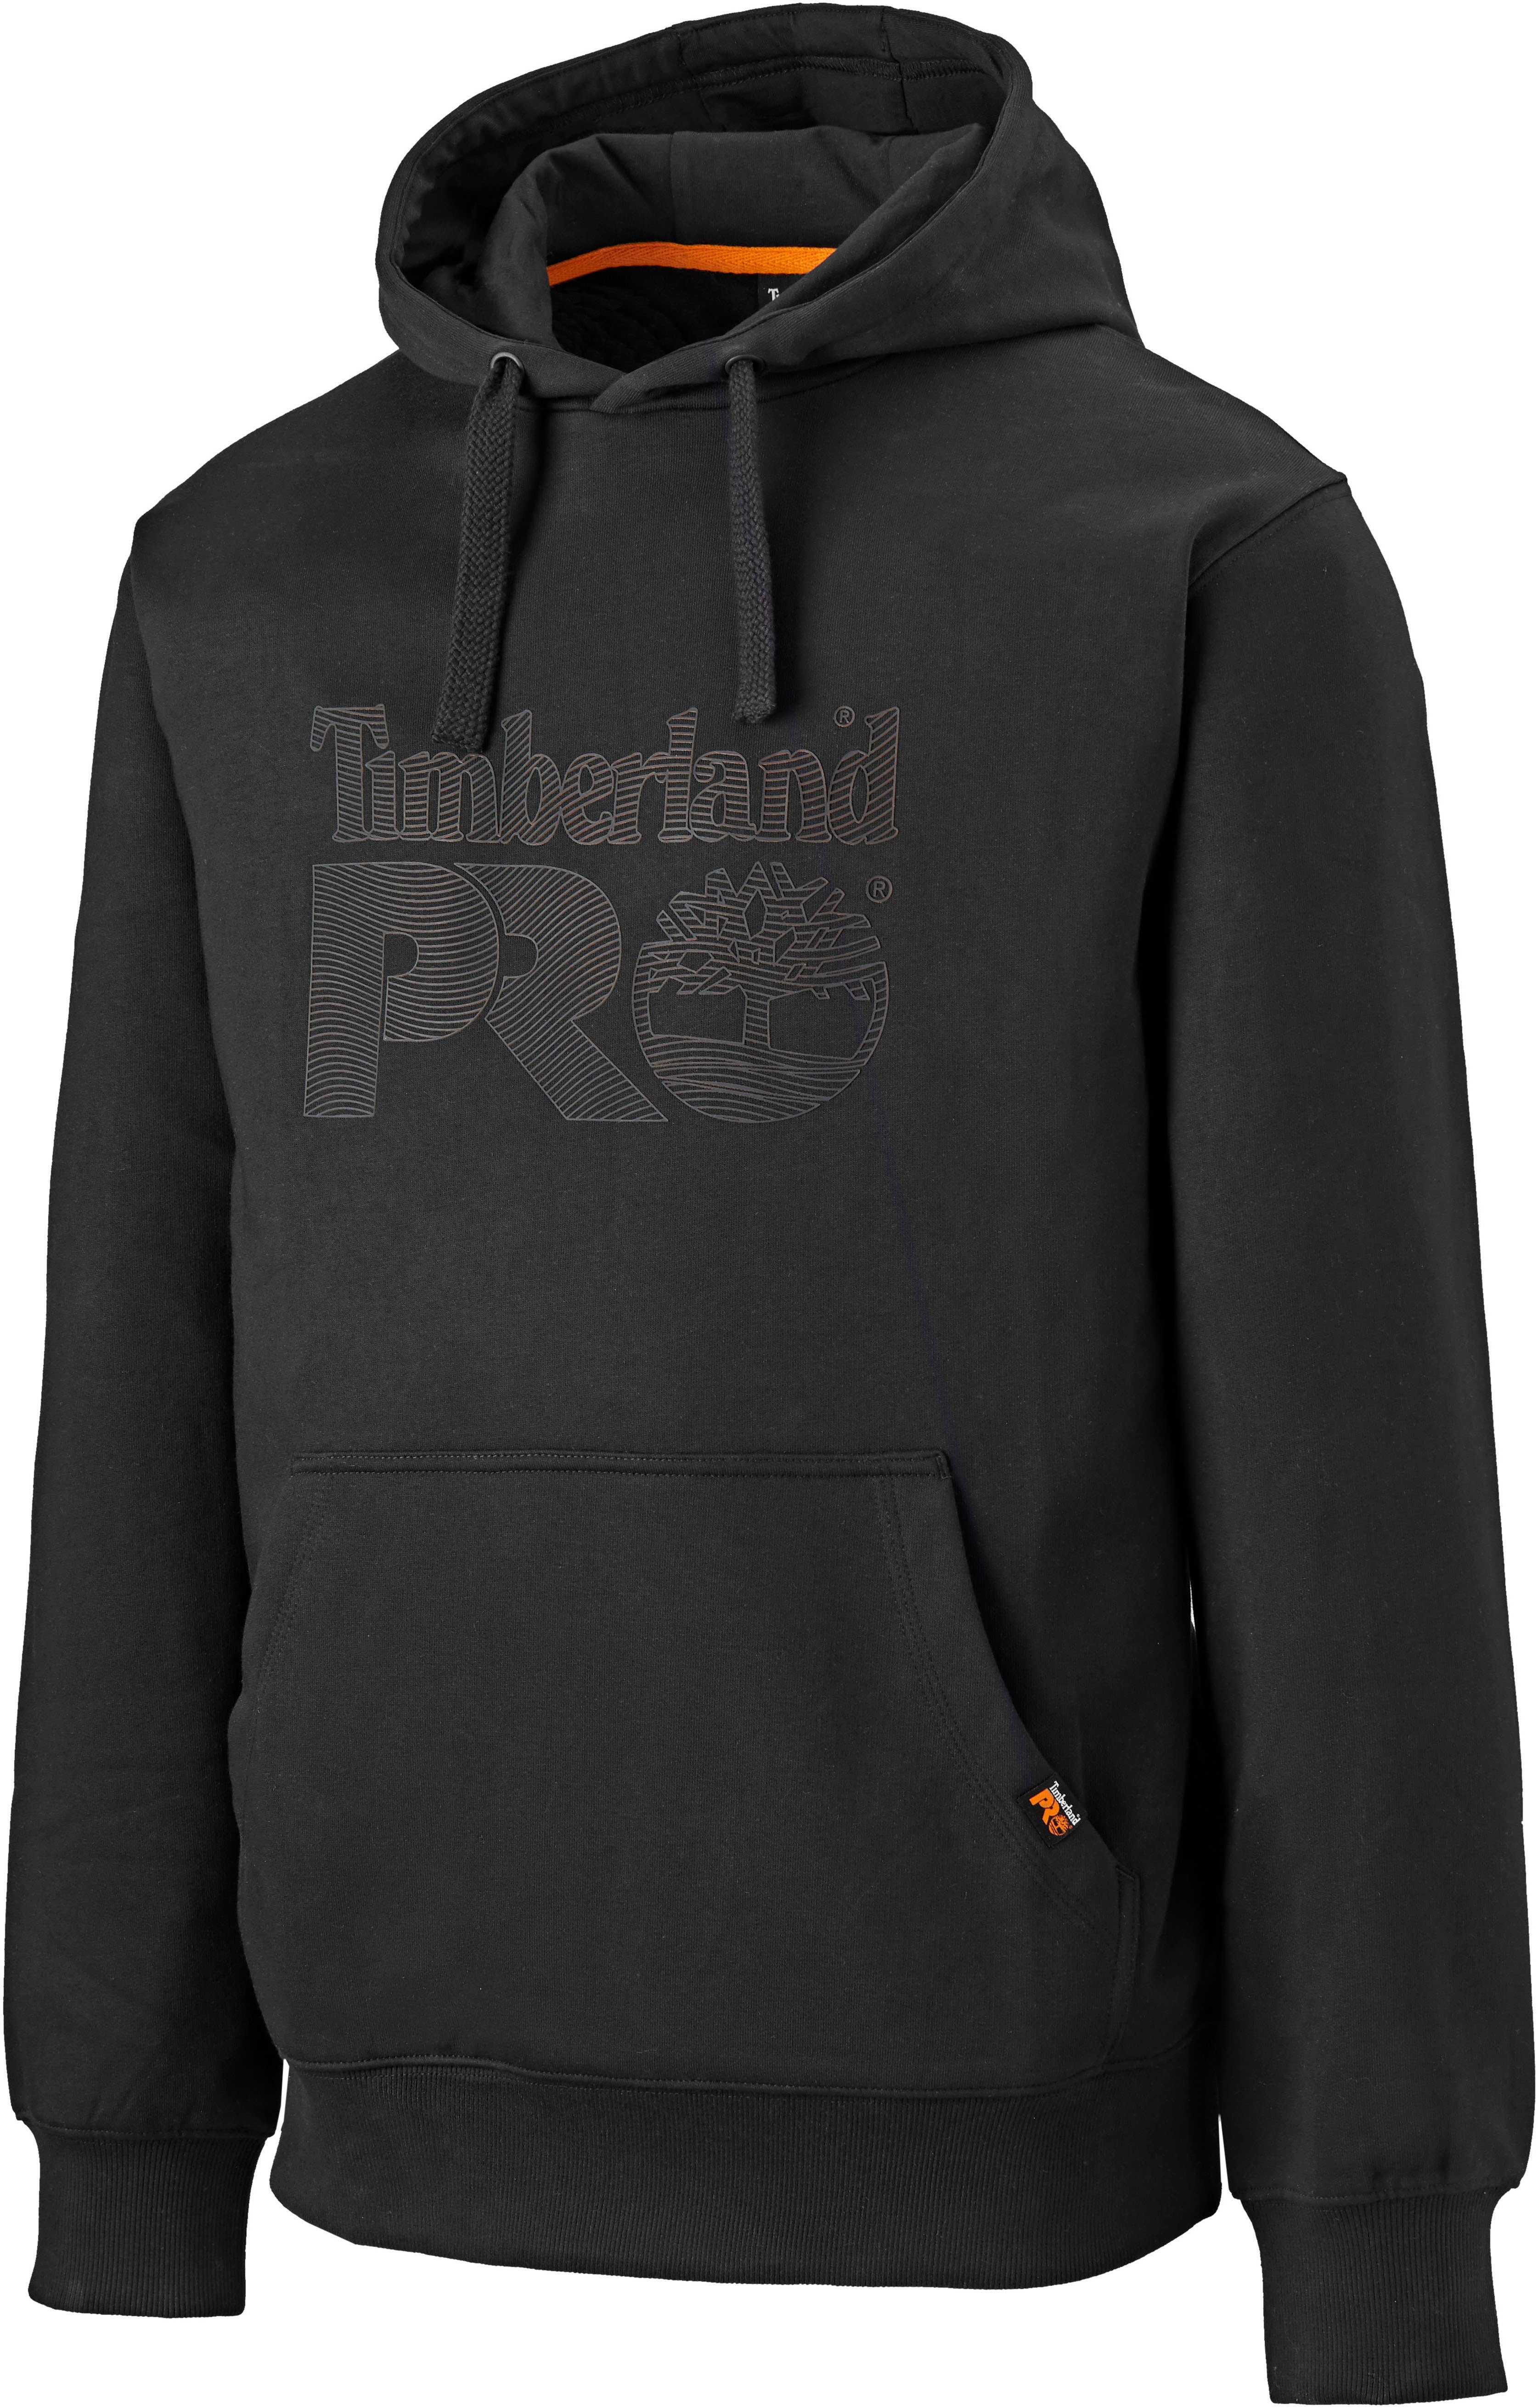 Timberland Pro Hoodie aus robustem Kordelzug Kapuze mit mit Material, Kängurutasche